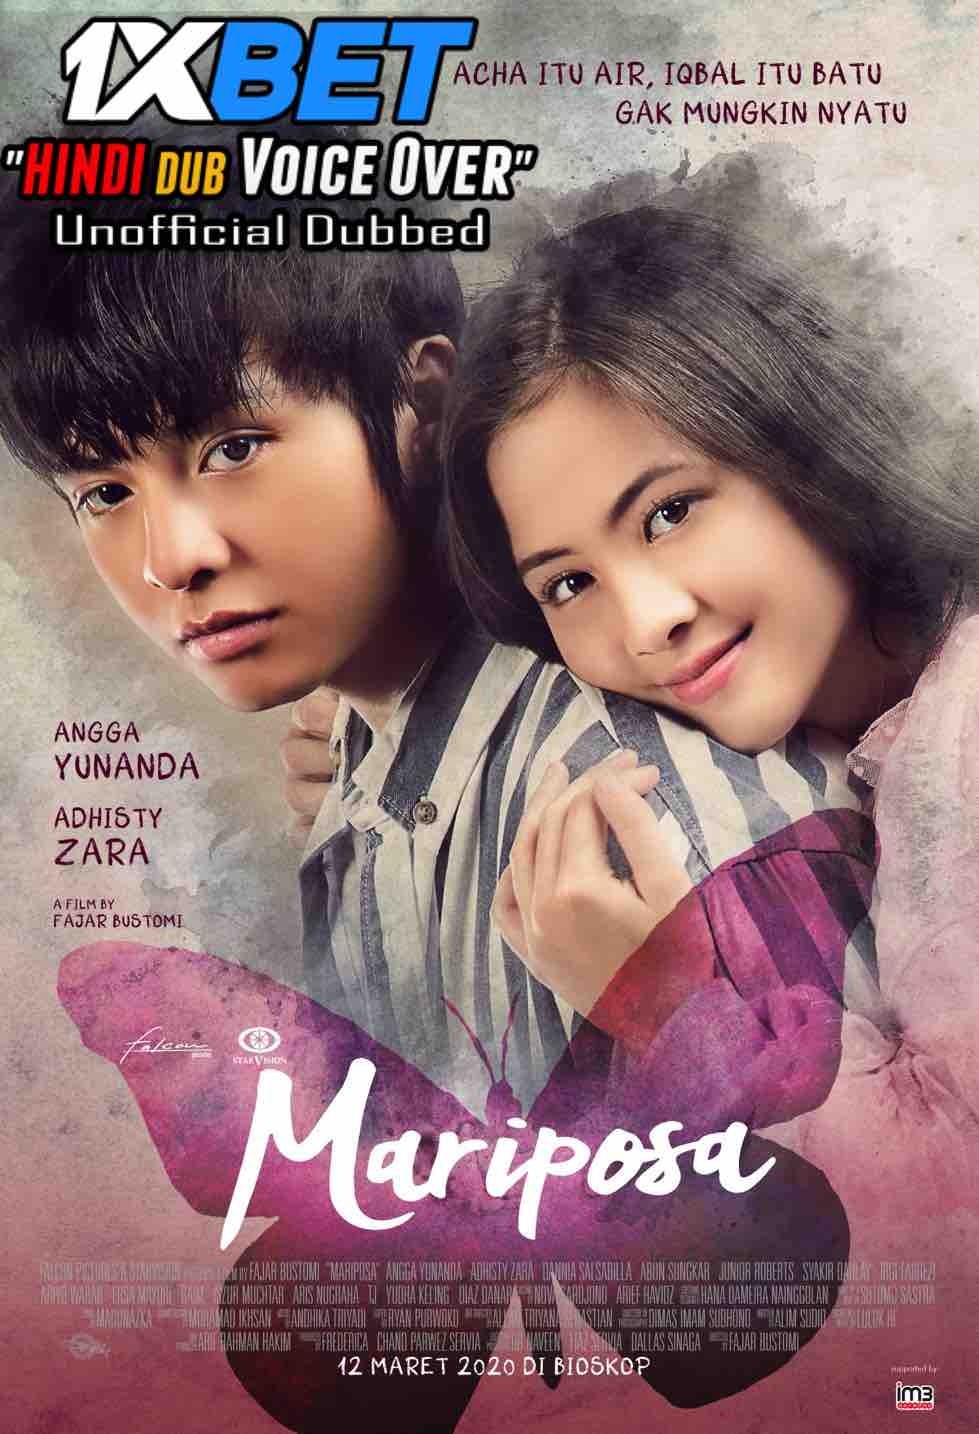 Download Mariposa (2020) Quality 720p & 480p Dual Audio [Hindi Dubbed] Mariposa Full Movie On KatMovieHD